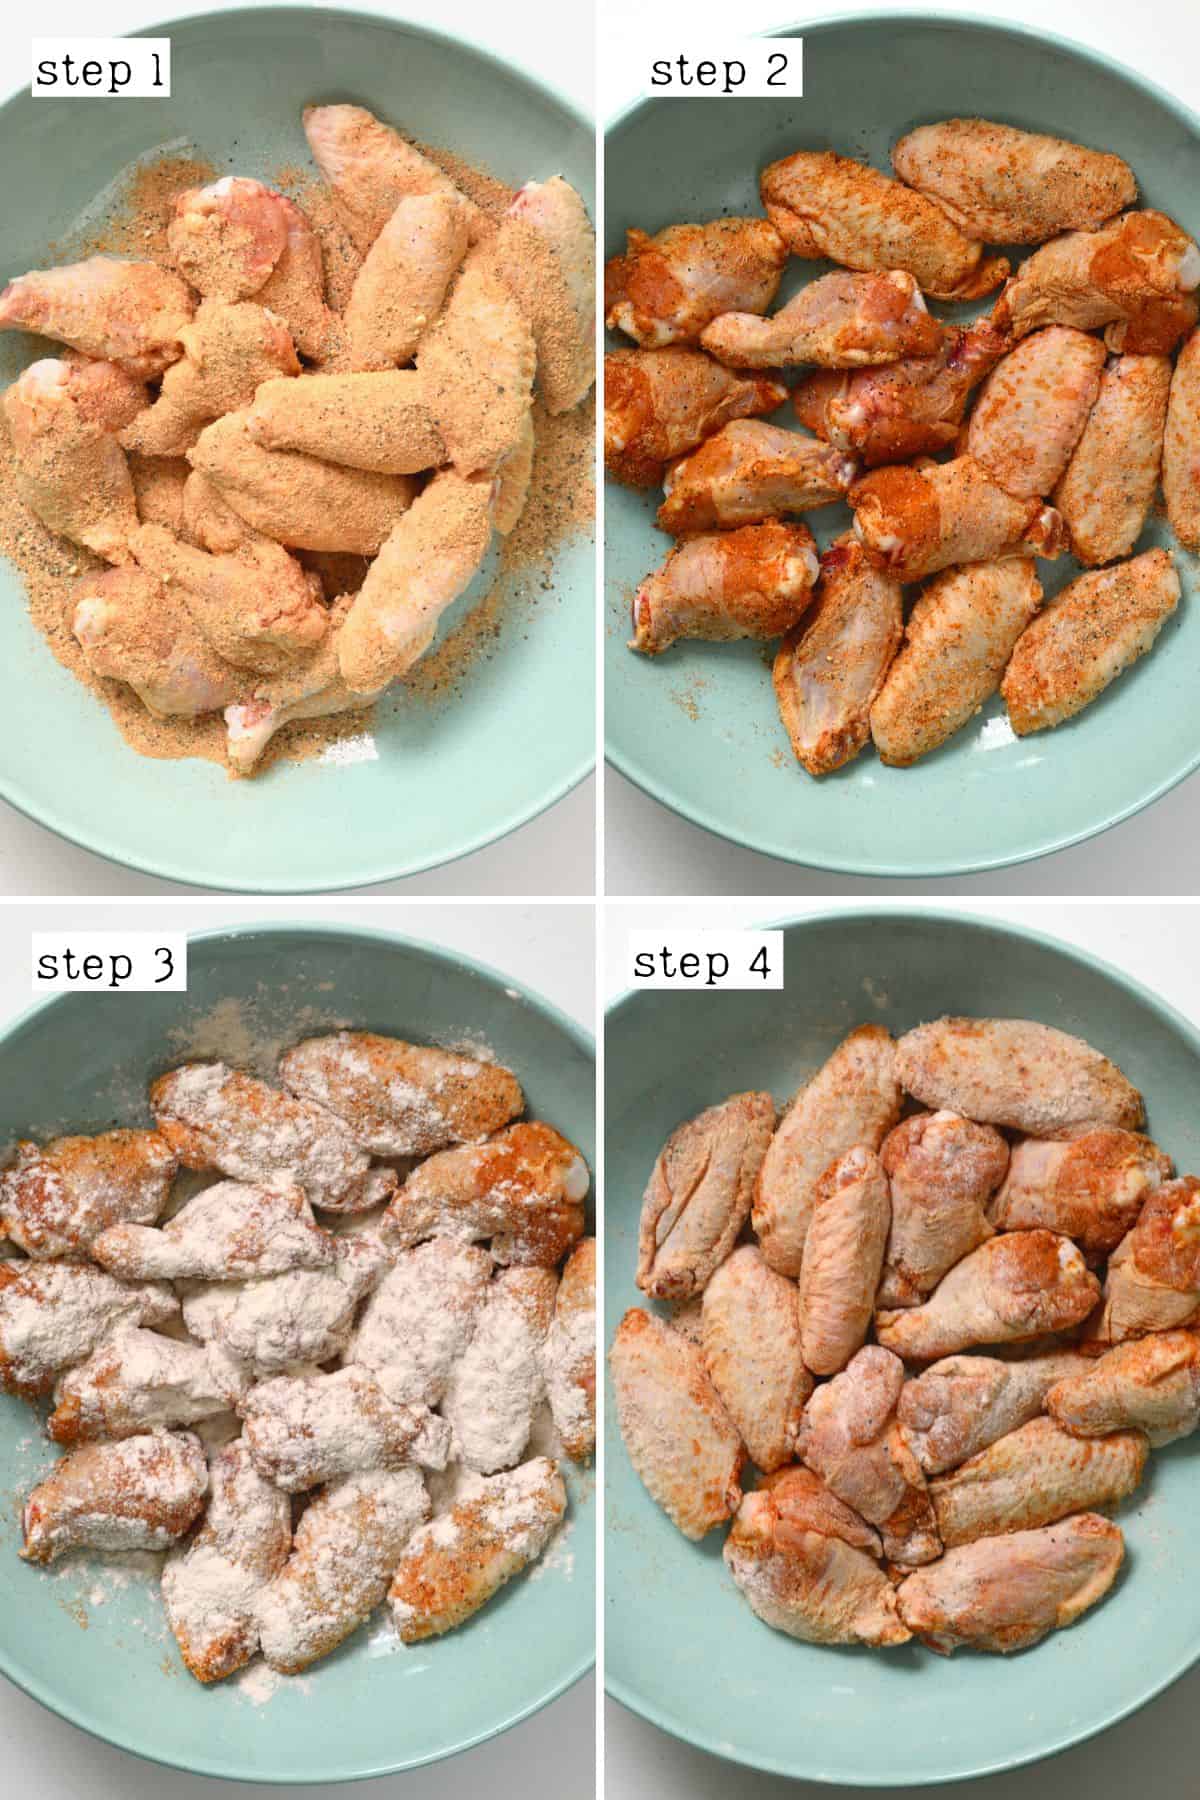 Steps for seasoning chicken wings